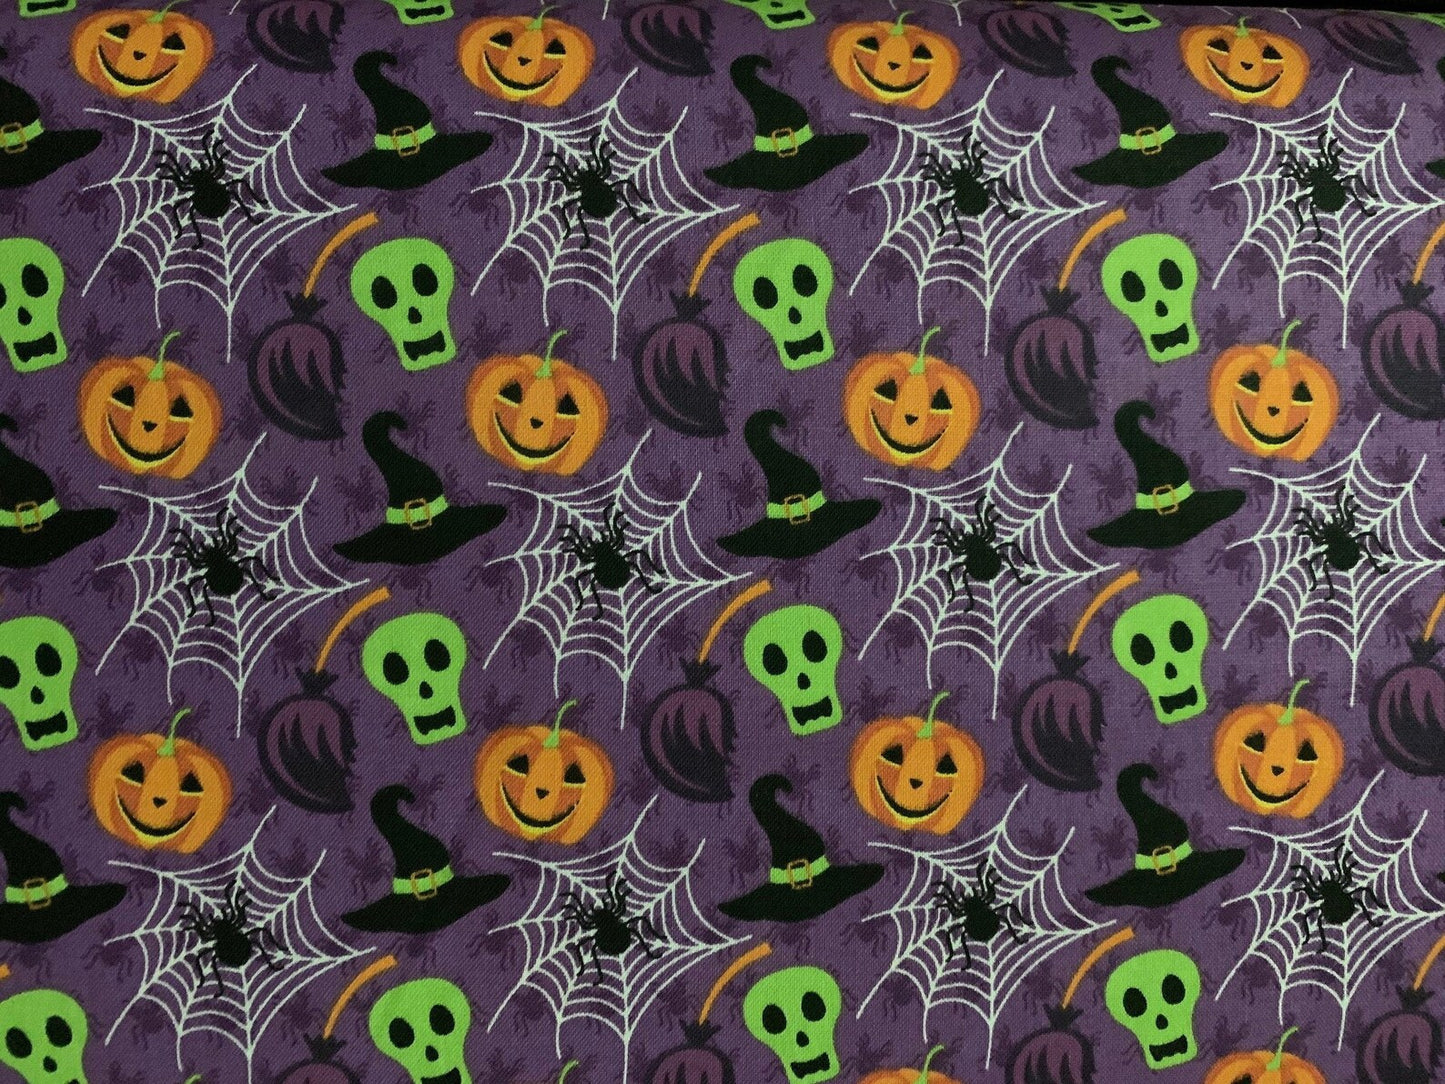 45 x 36 Halloween Pumpkin Skull Spiderweb on Purple 100% Cotton Fabric